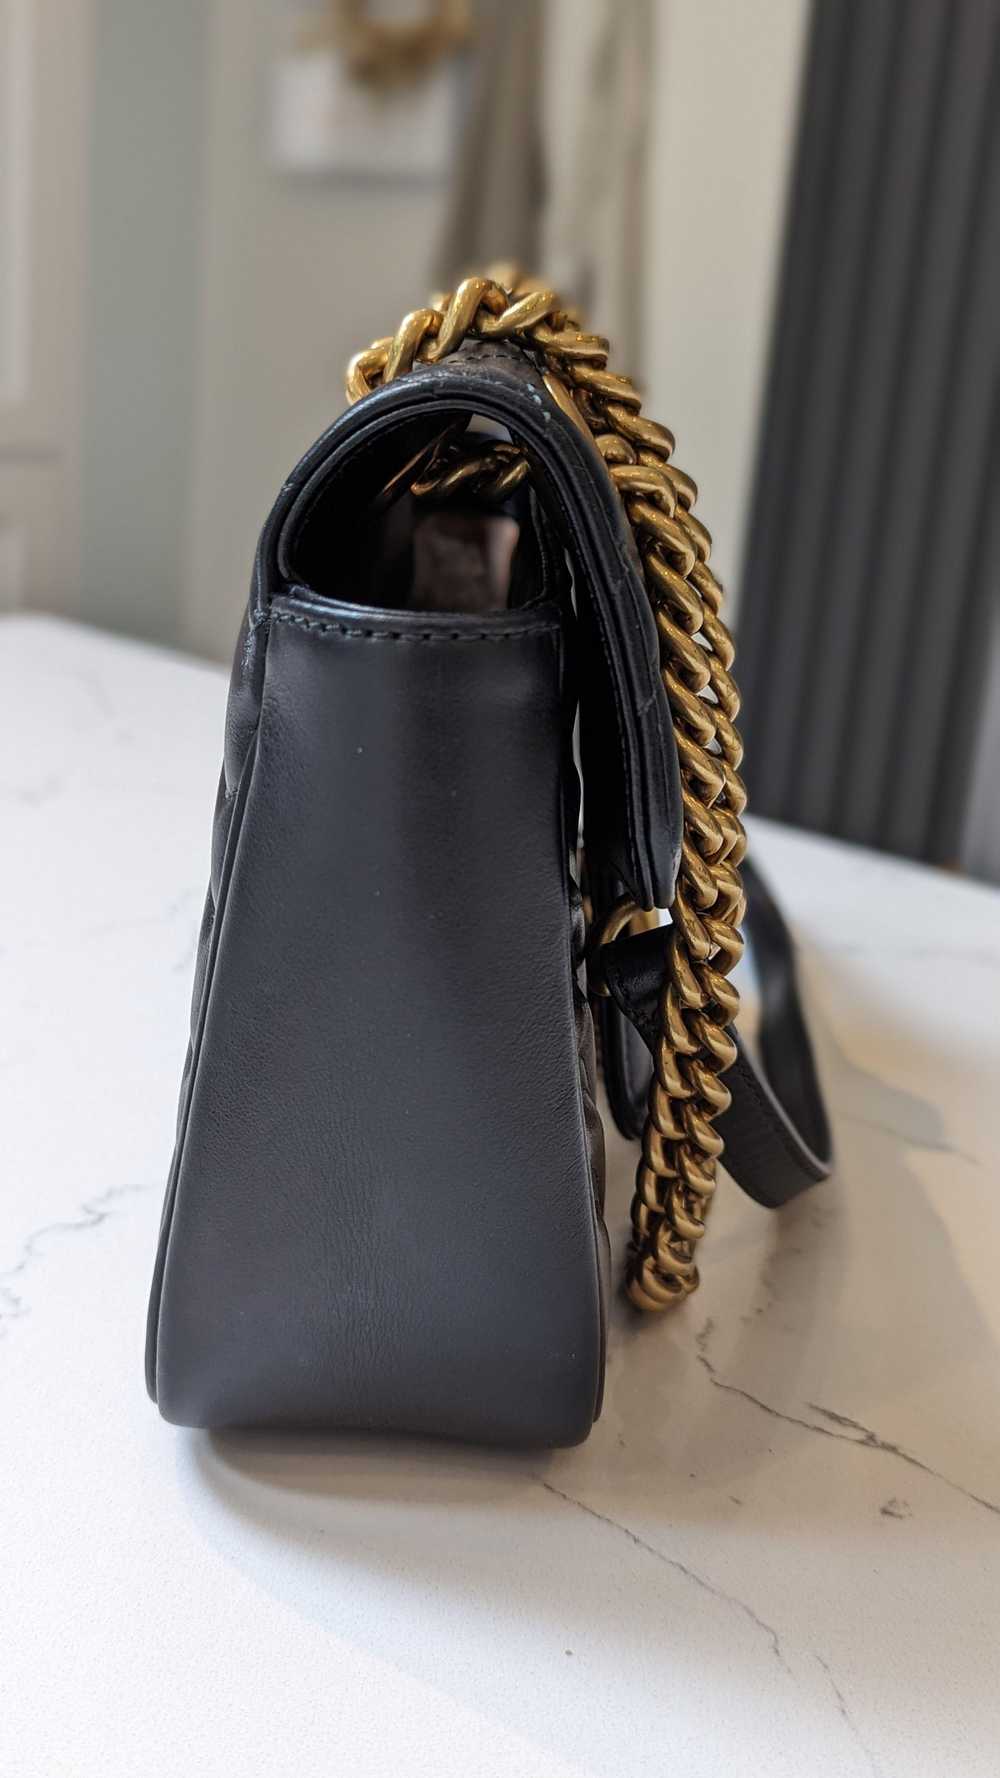 Product Details Gucci Black Leather Medium Marmont - image 4